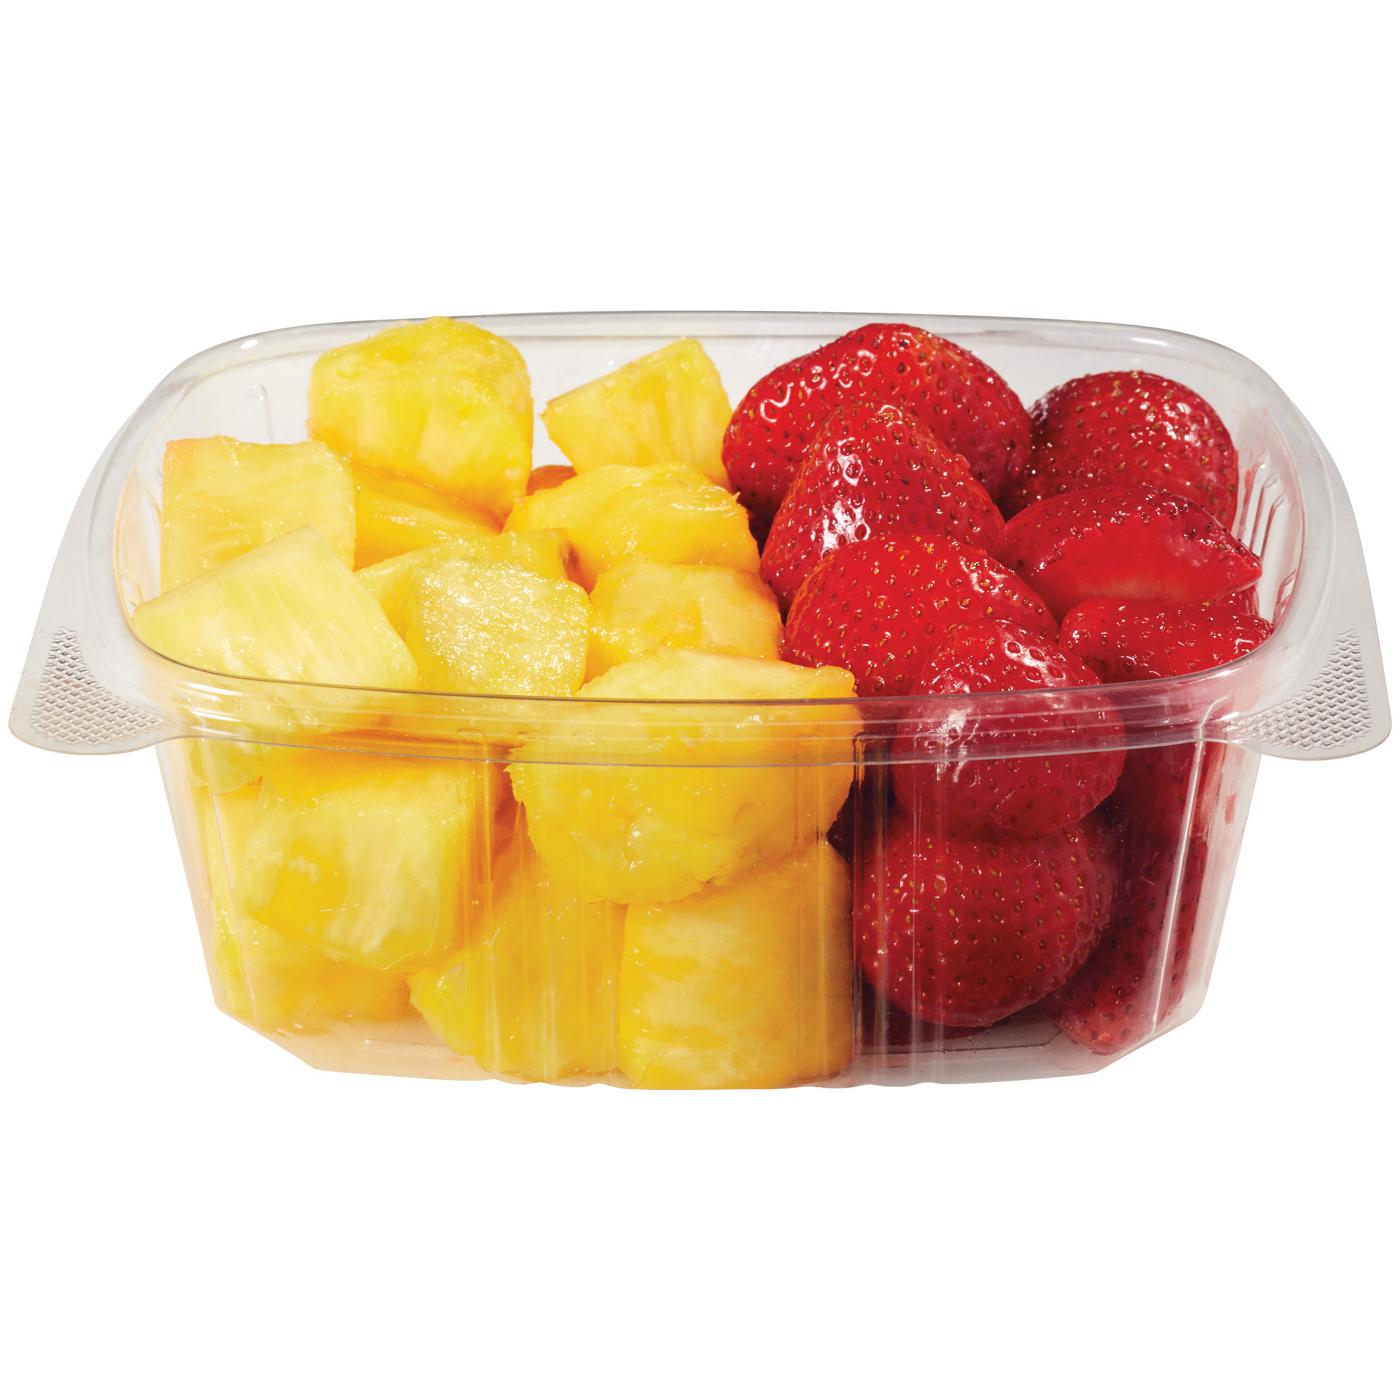 H-E-B Fresh Cut Pineapple & Strawberries - Large; image 2 of 2